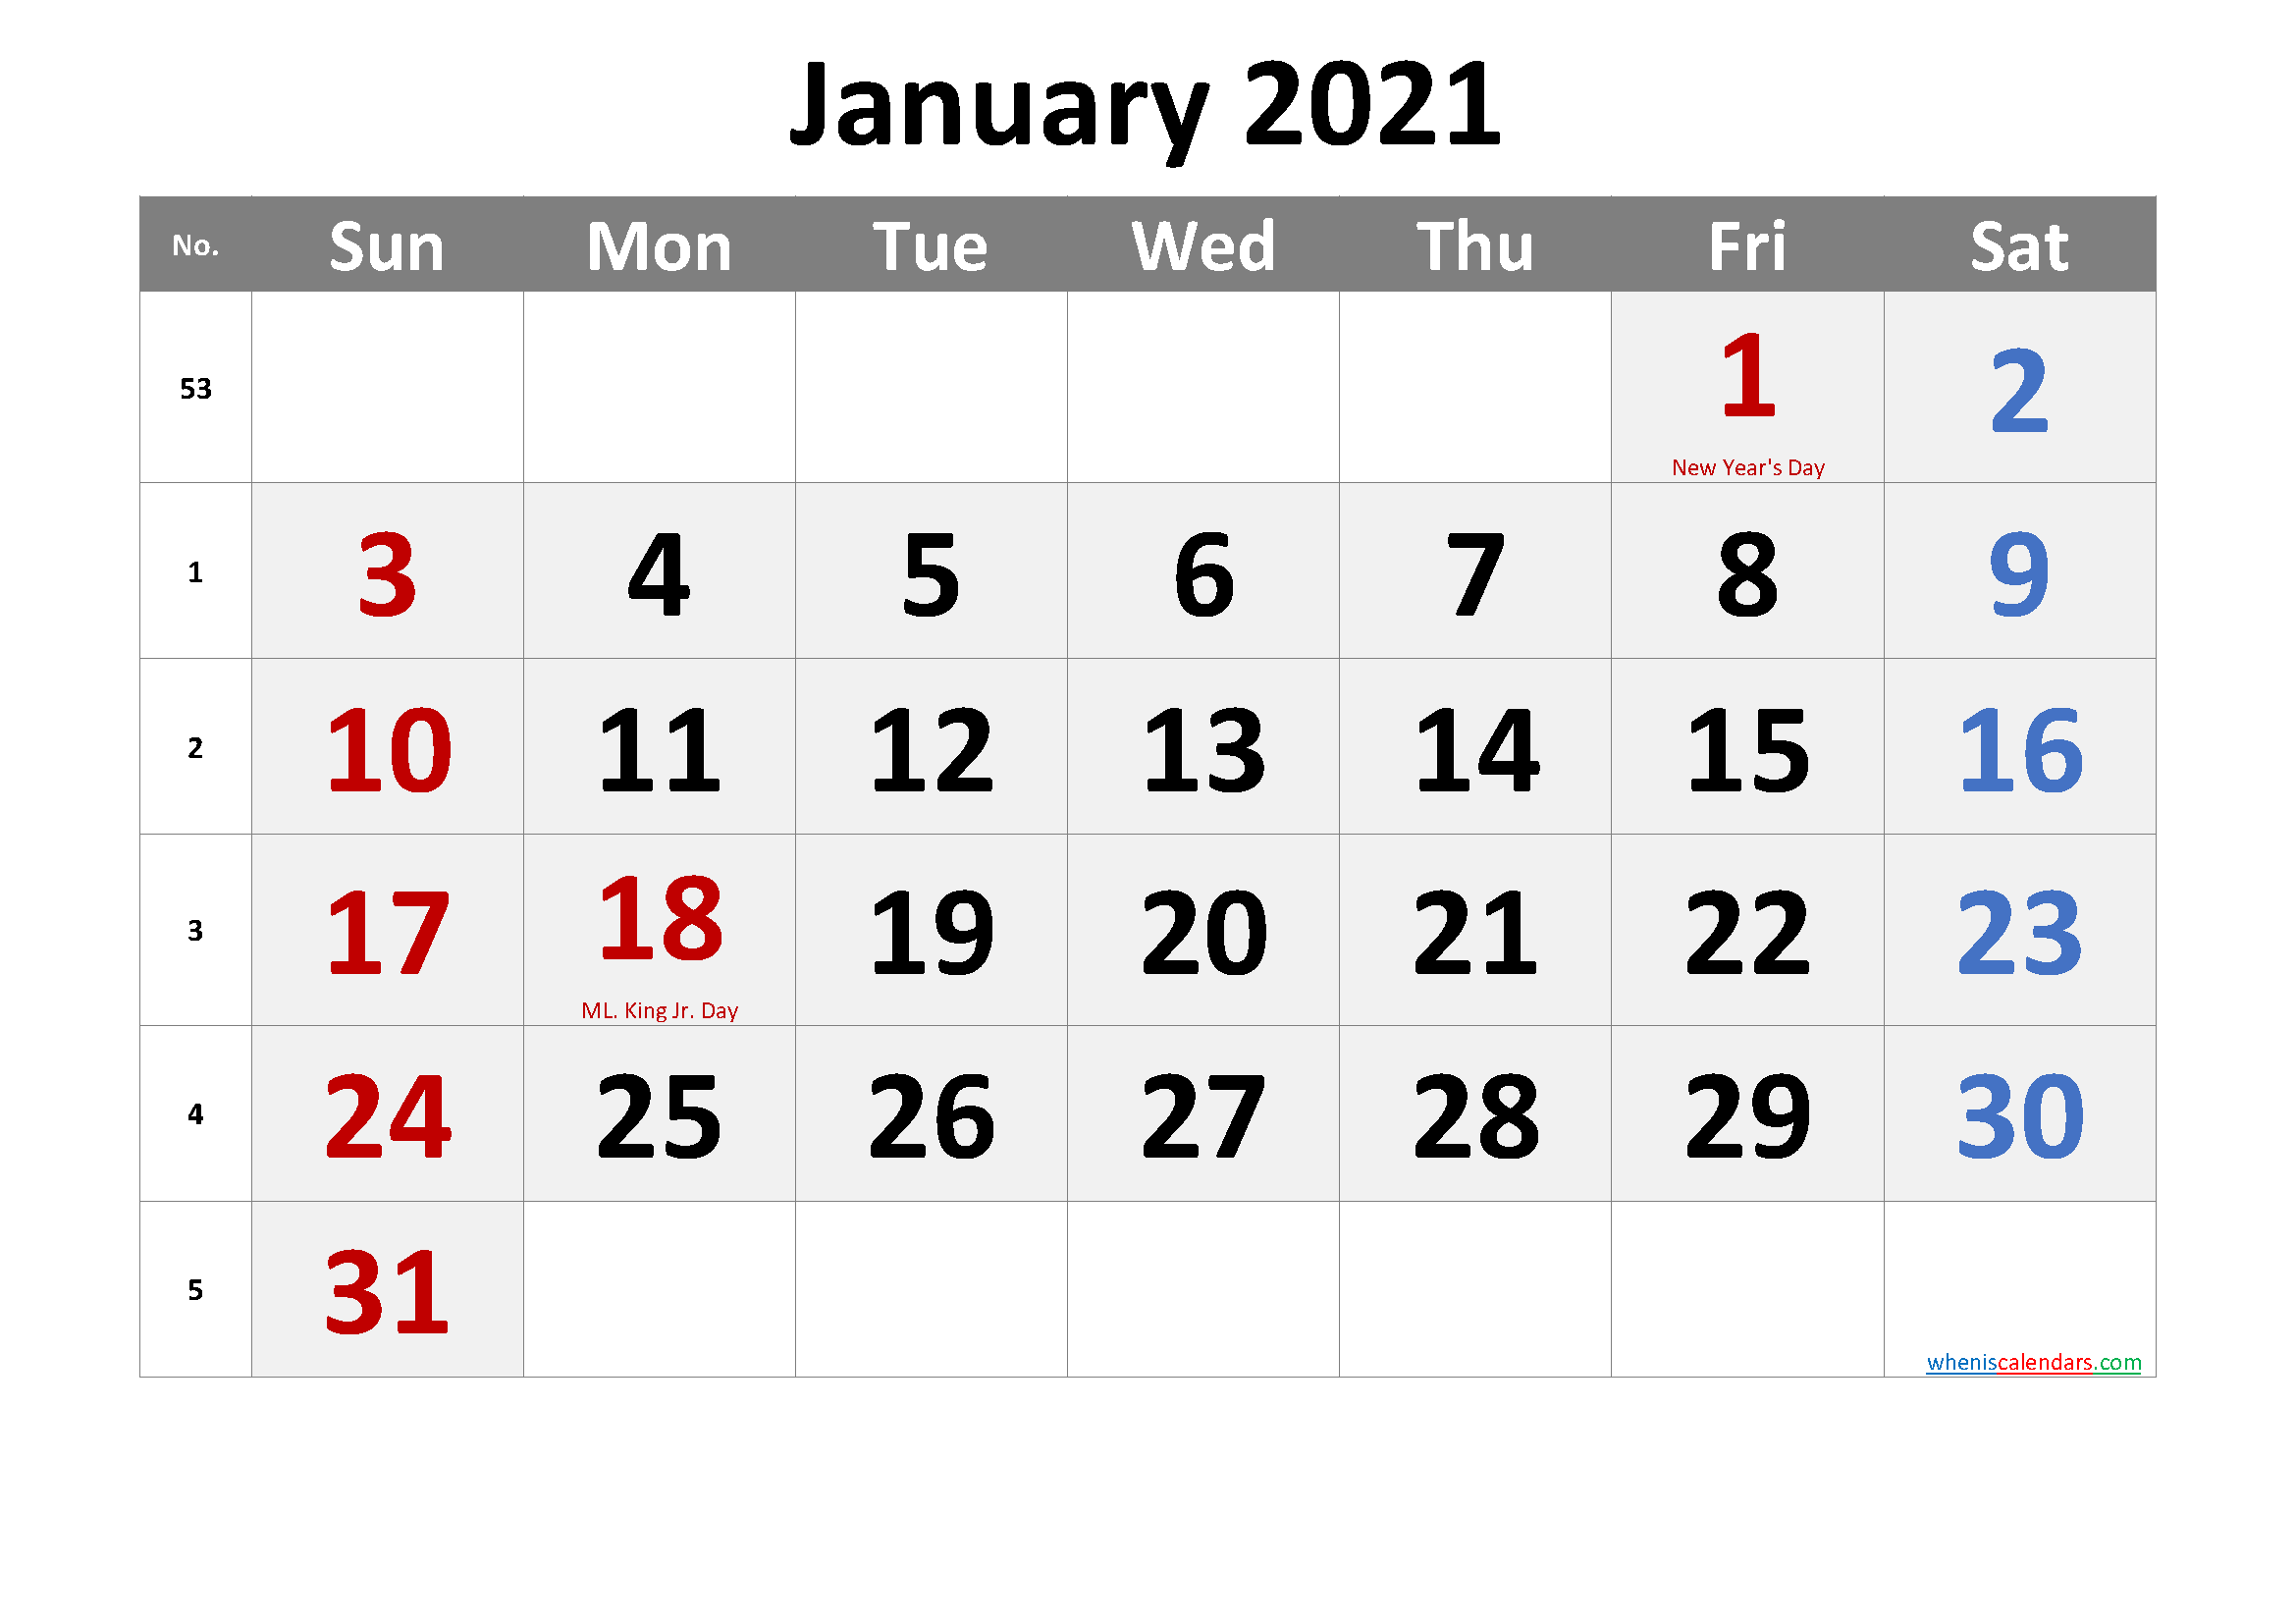 JANUARY 2021 Printable Calendar with Holidays